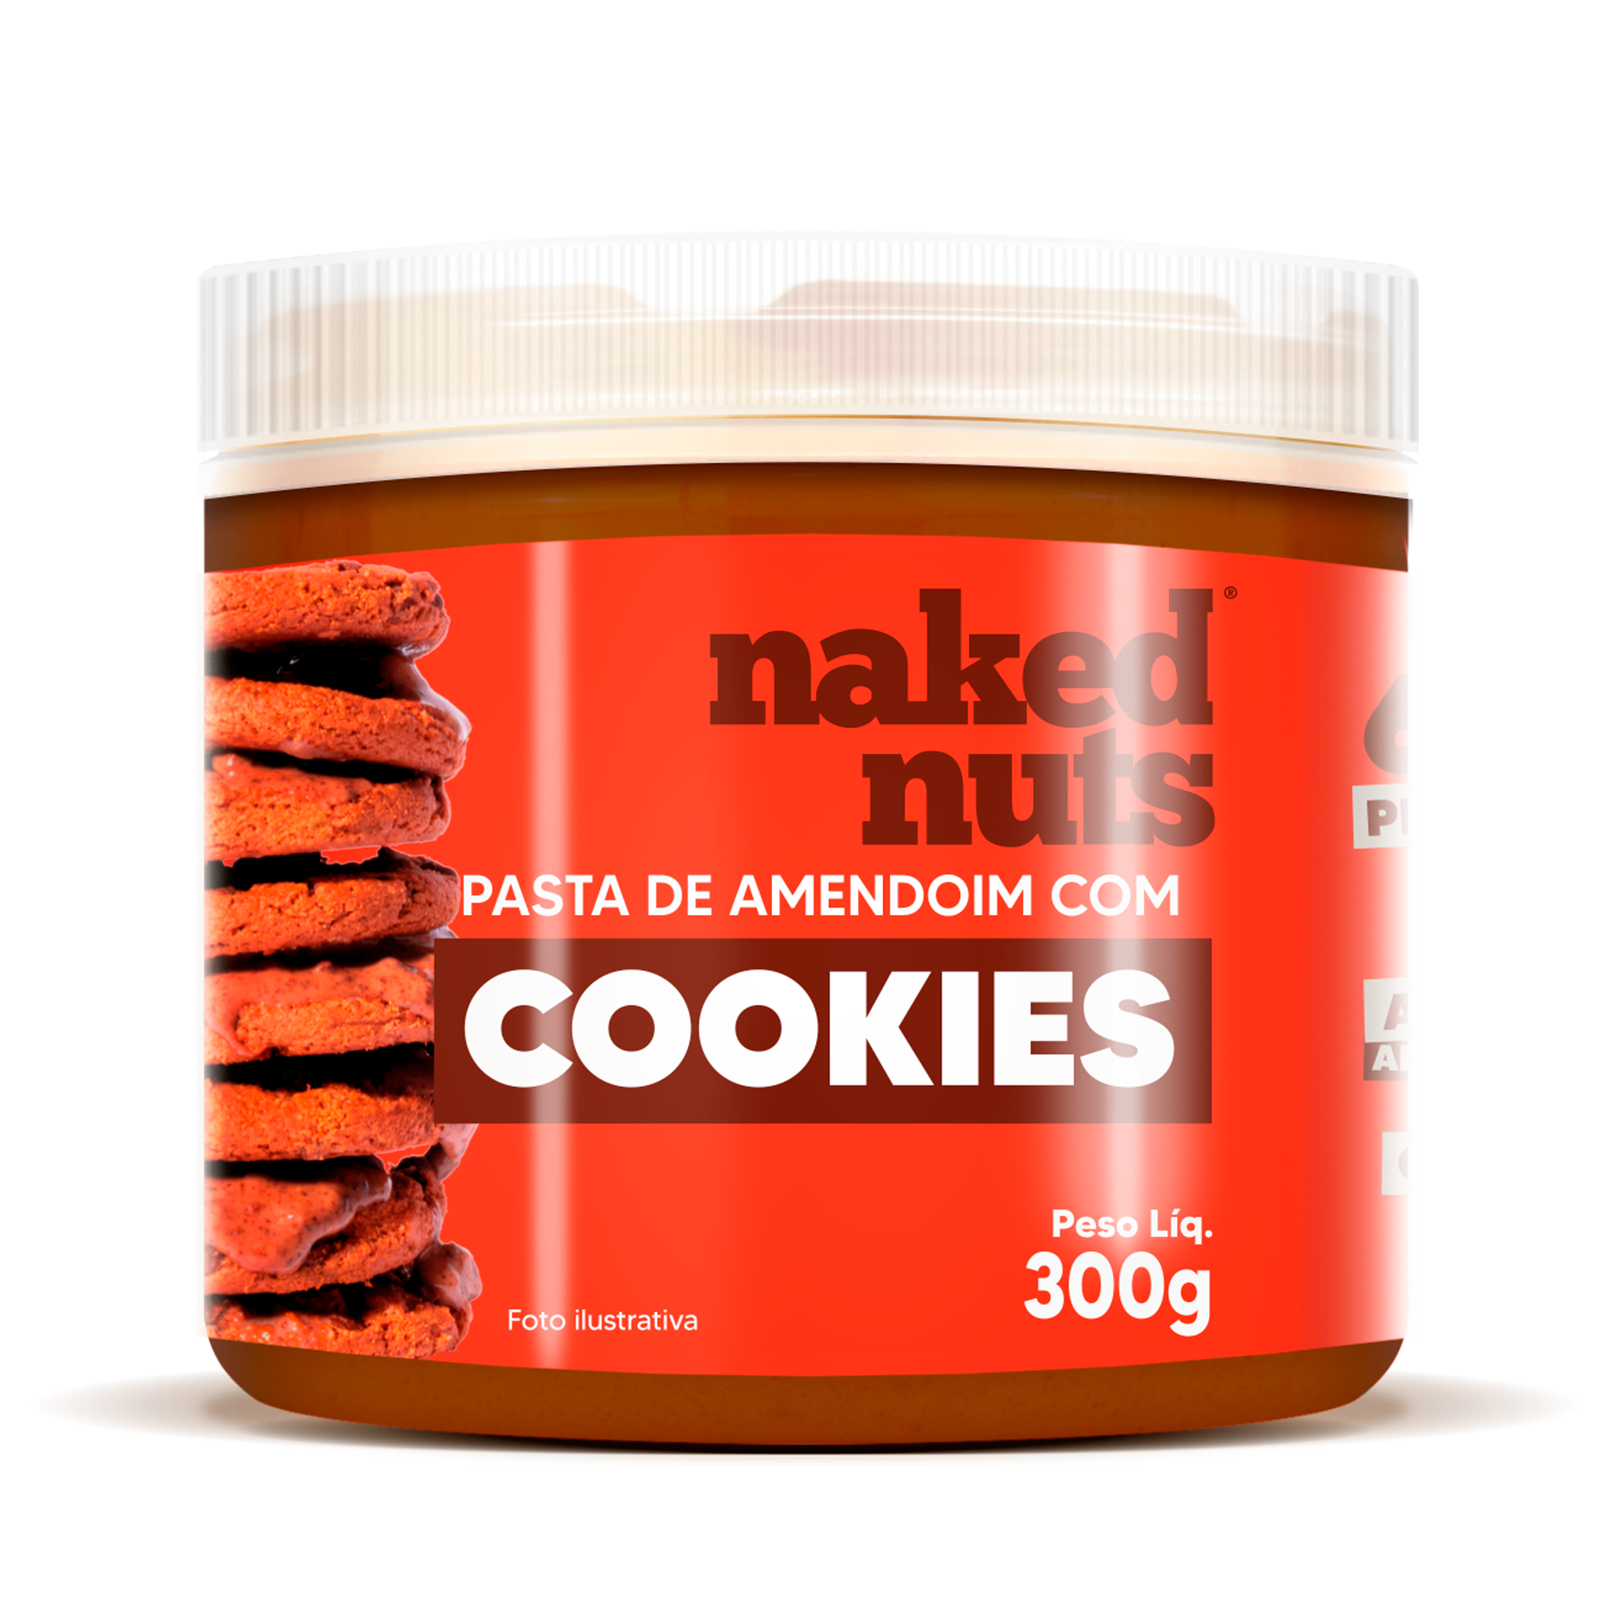 Pasta de Amendoim com Cookies de Chocolate - Naked Nuts